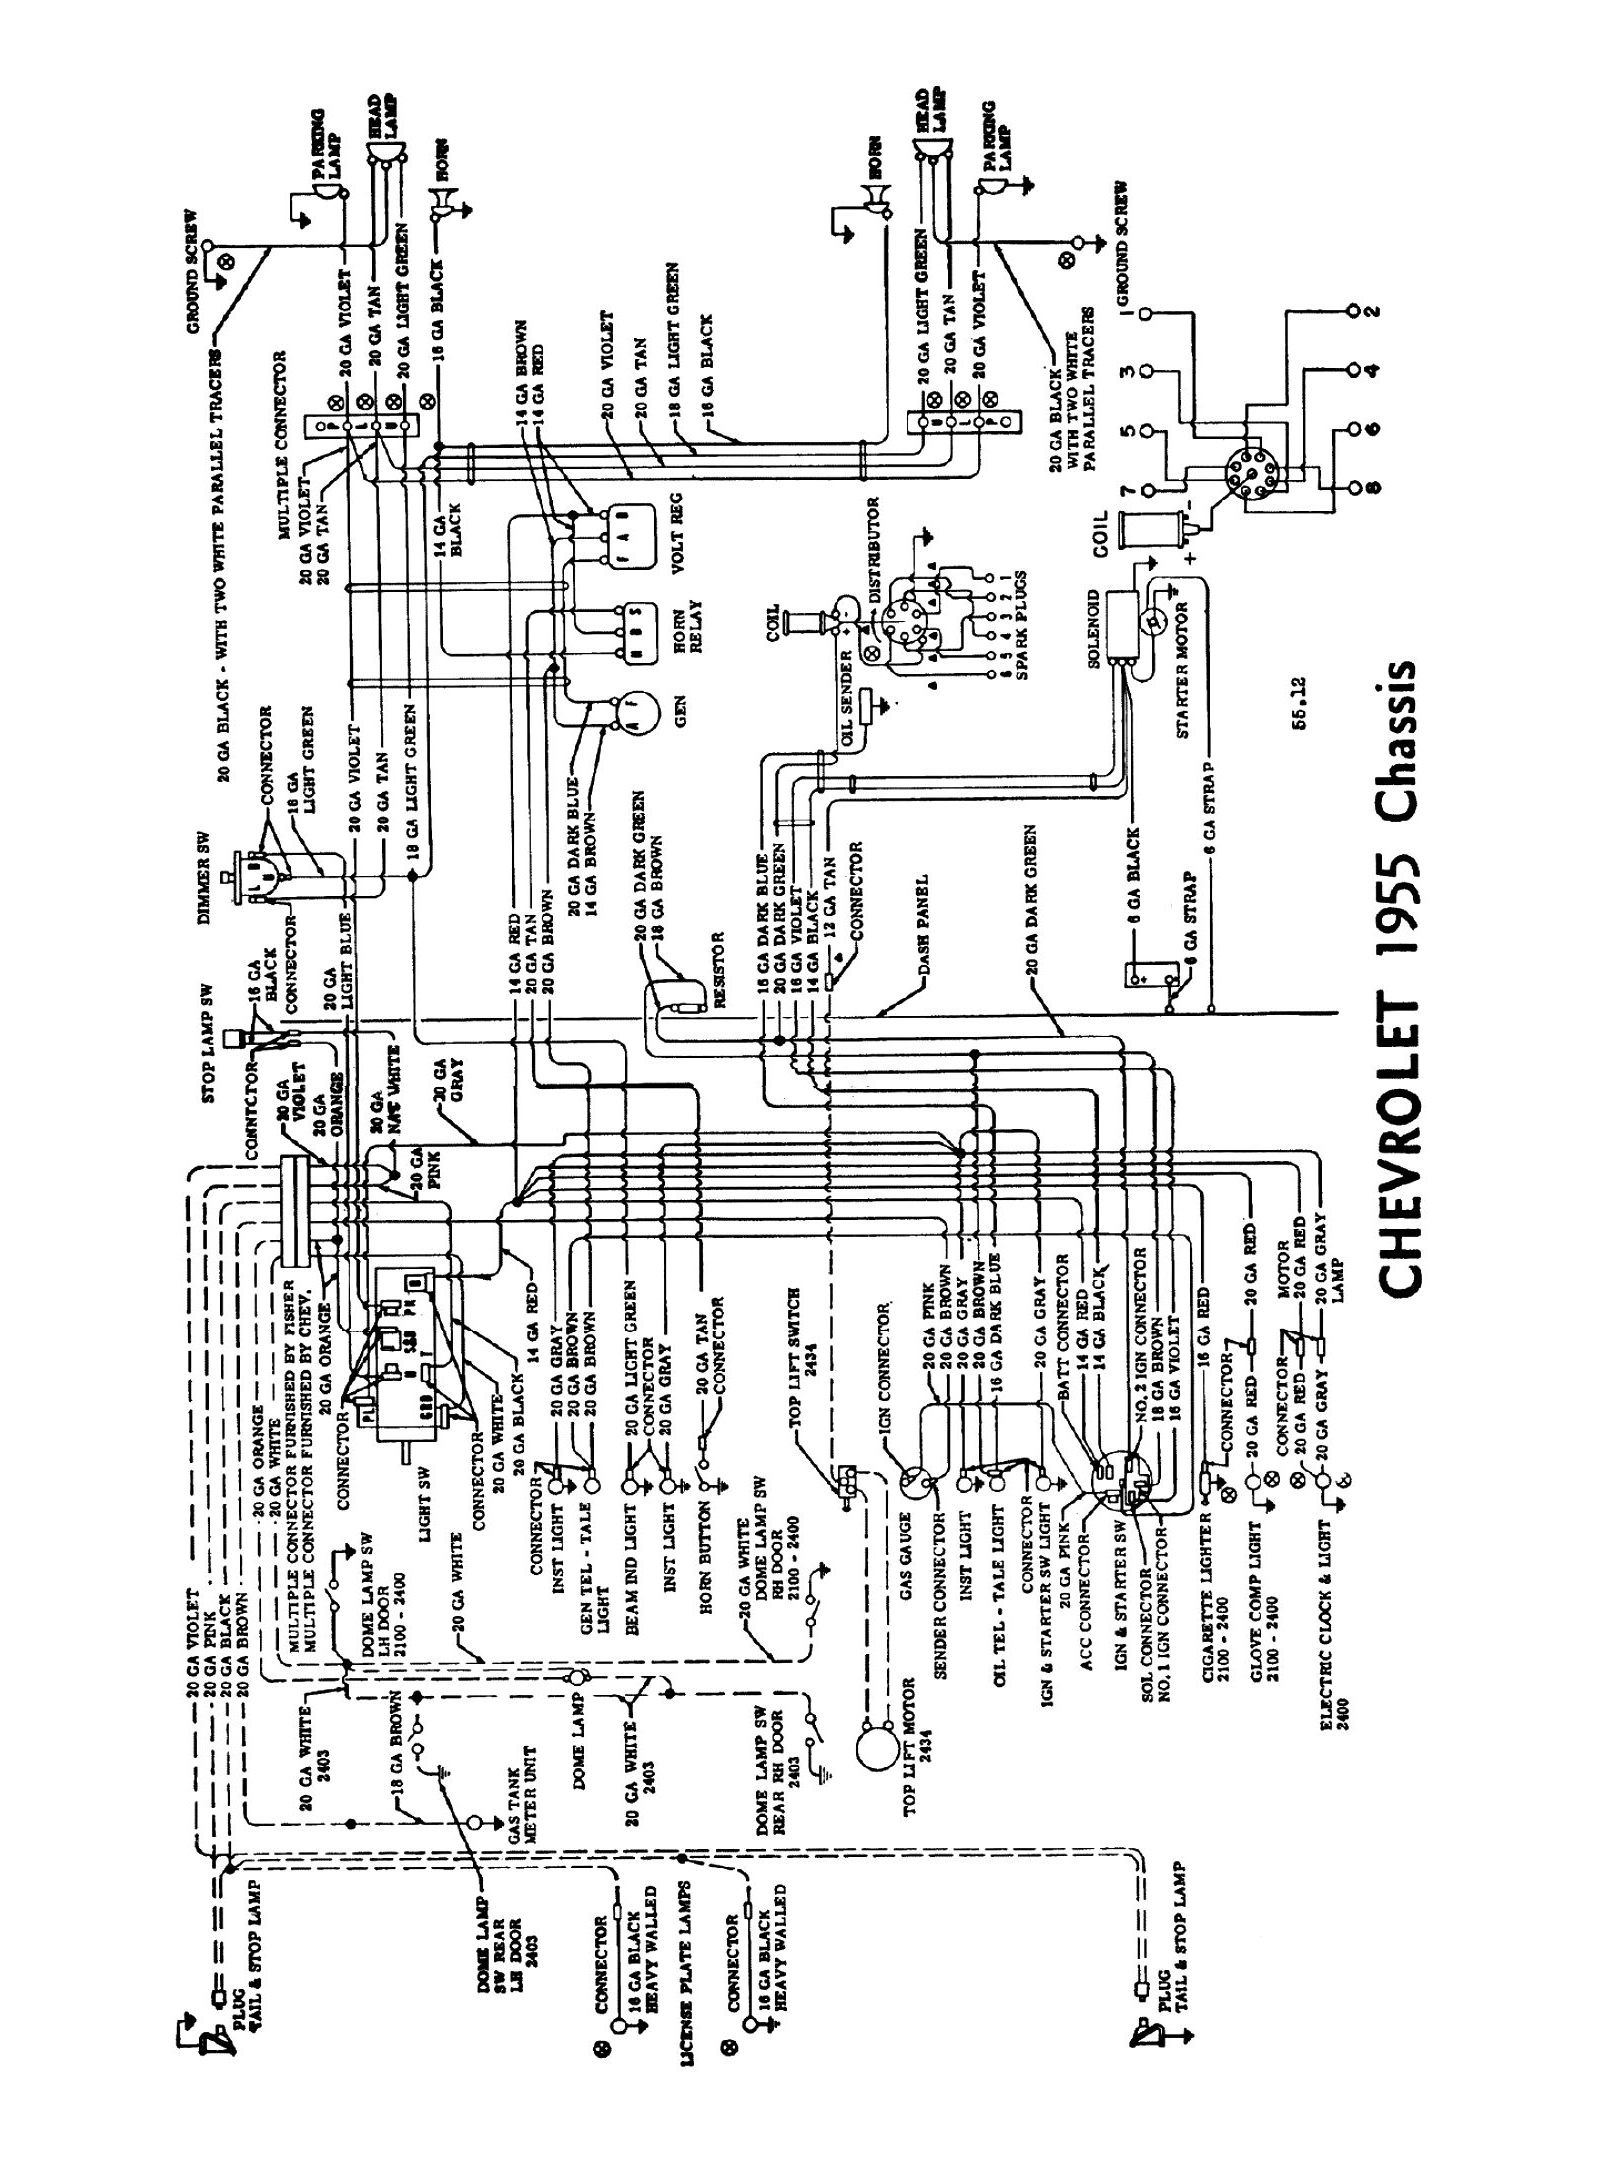 Chevy Wiring Diagrams - Fuel Sending Unit Wiring Diagram